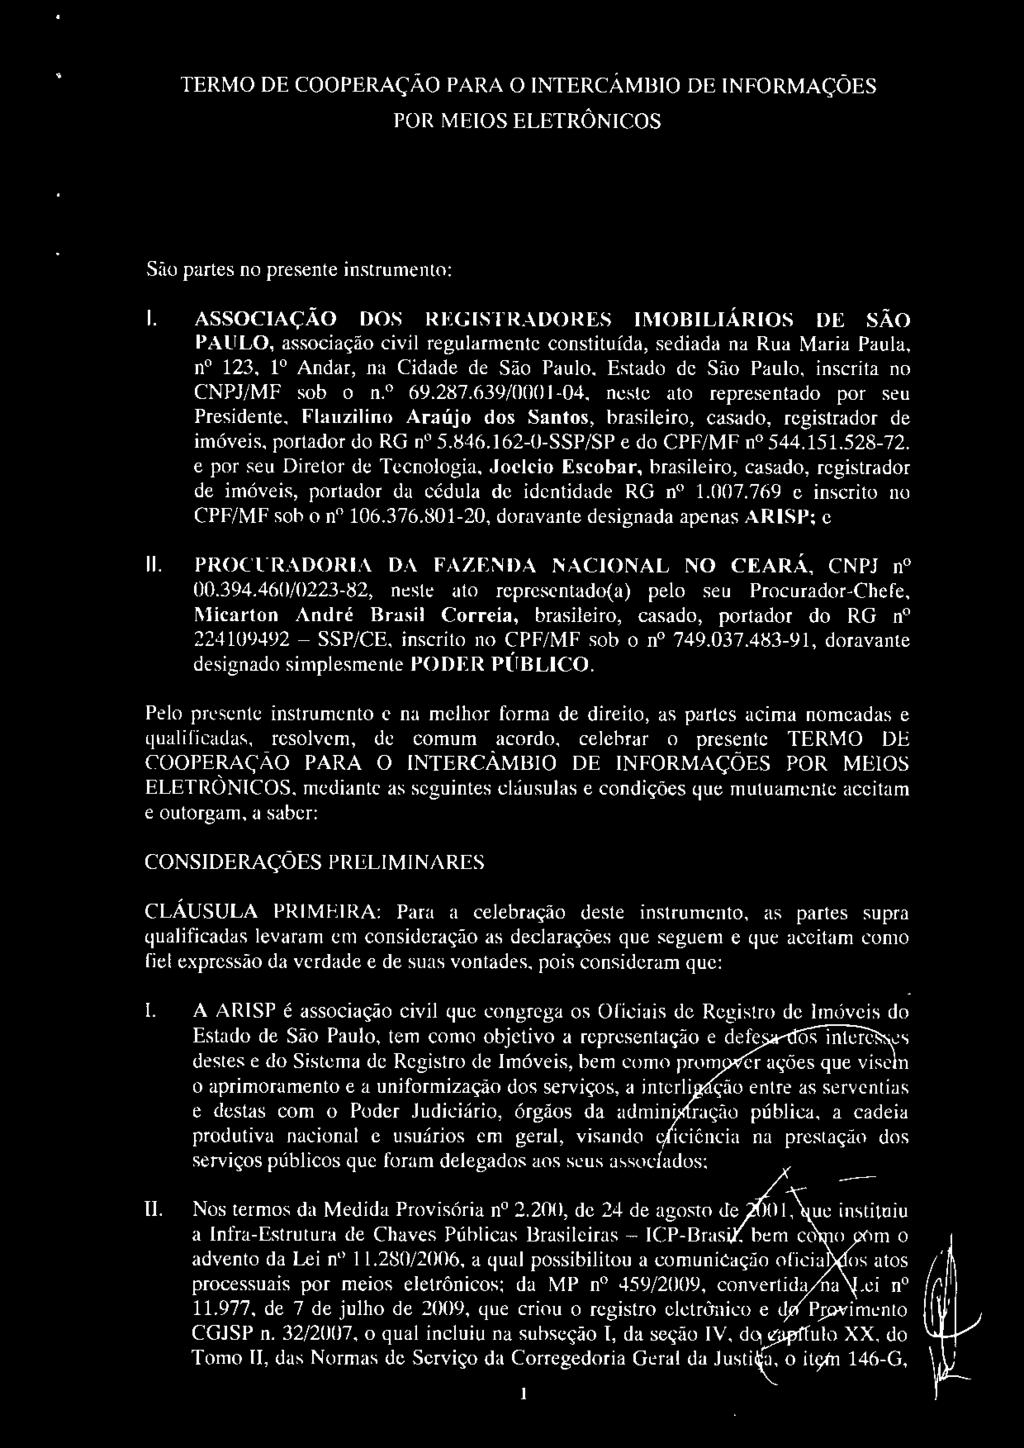 CNPJ/MF sob o n. 0 69.287.639/0001-04, neste ato representado por seu Presidente, Flauzilino Araújo dos Santos, brasileiro, casado, registrador de imóveis, portador d9 RG n 5.846.